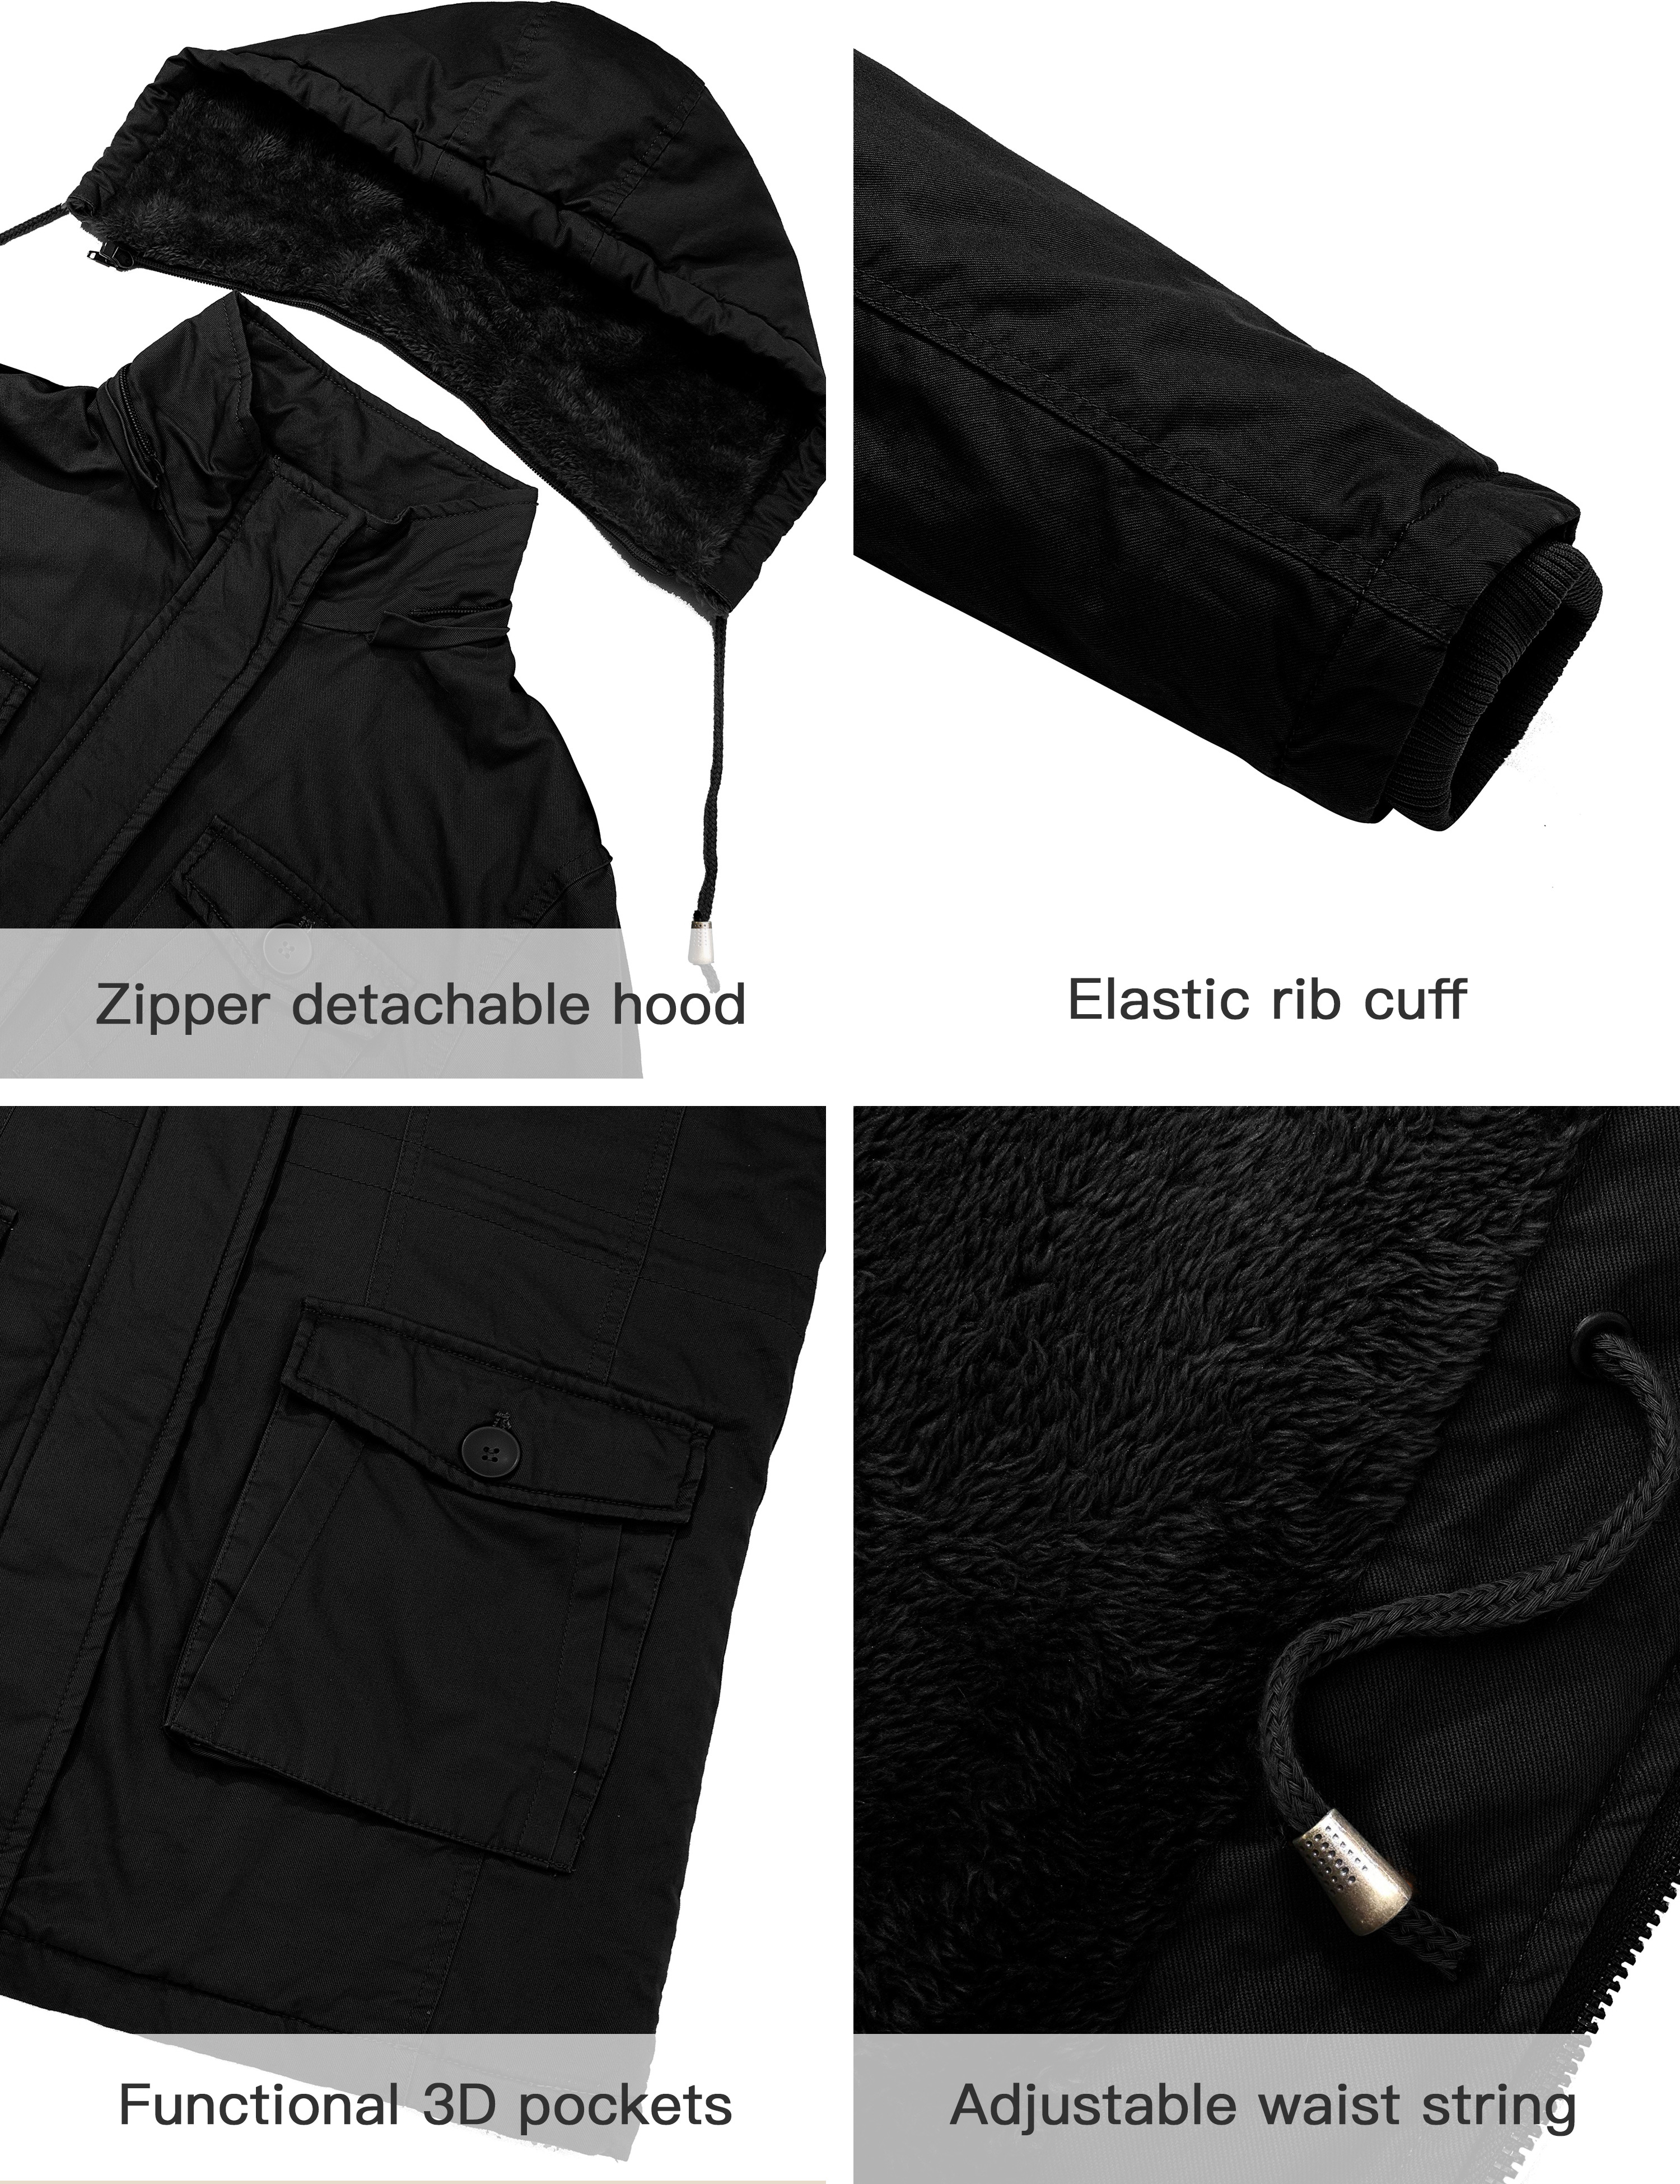 Wantdo Women's Winter Warm Coat Parka Jacket with Removable Hood Black Size S - image 4 of 6